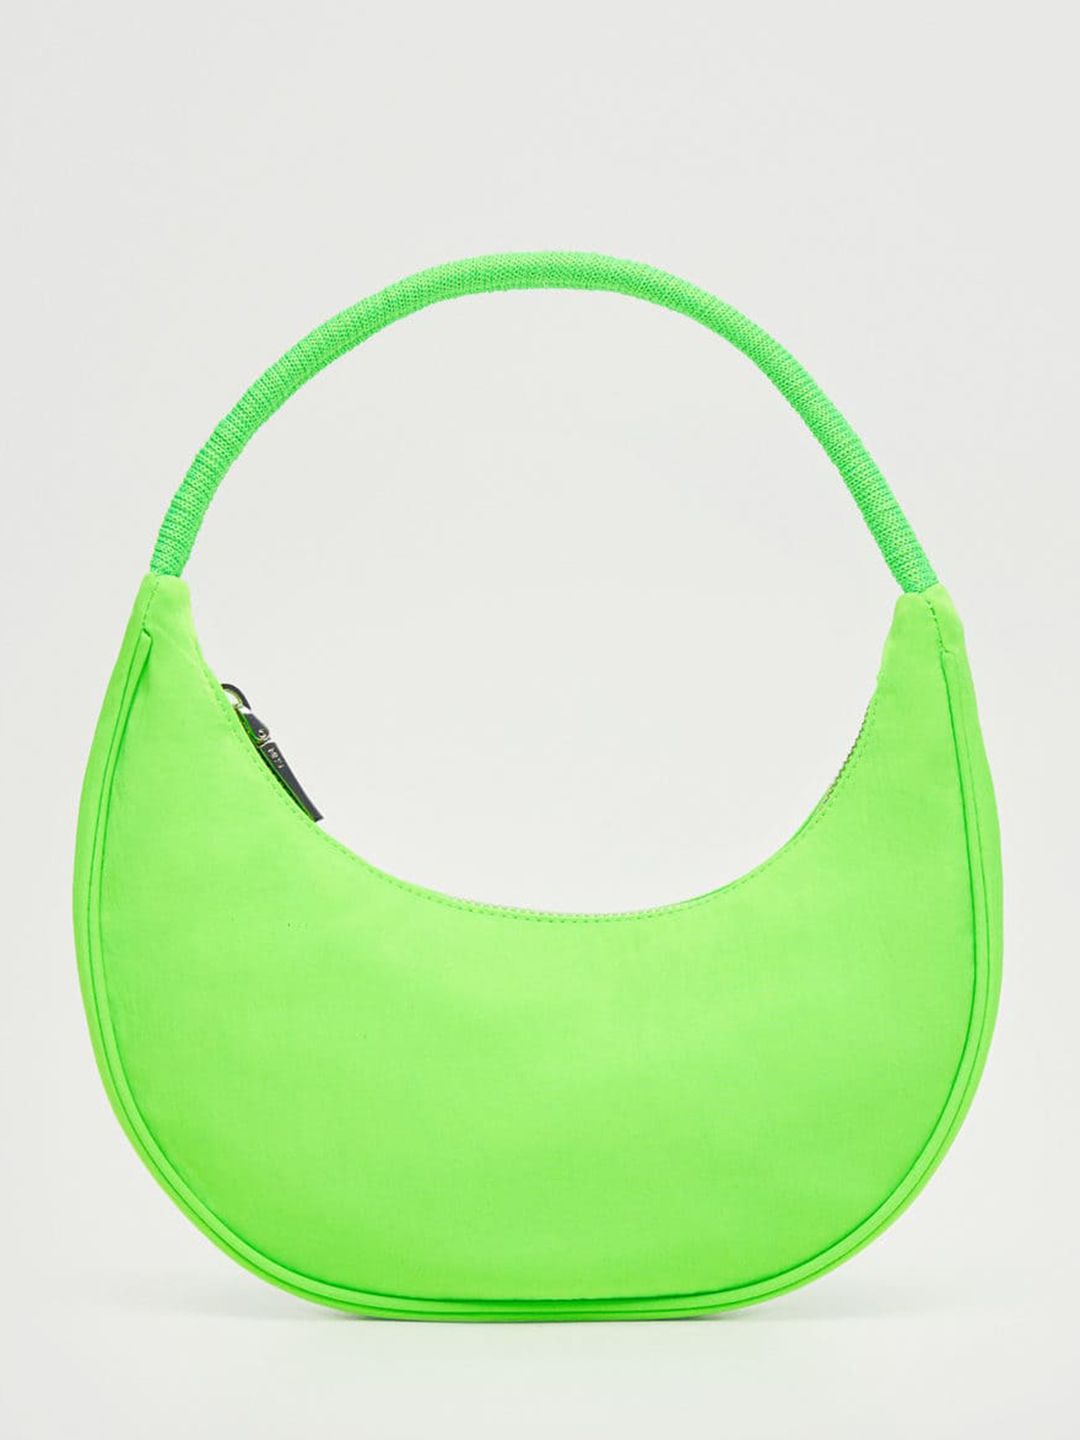 MANGO Neon Green Solid Half Moon Baguette Bag Price in India